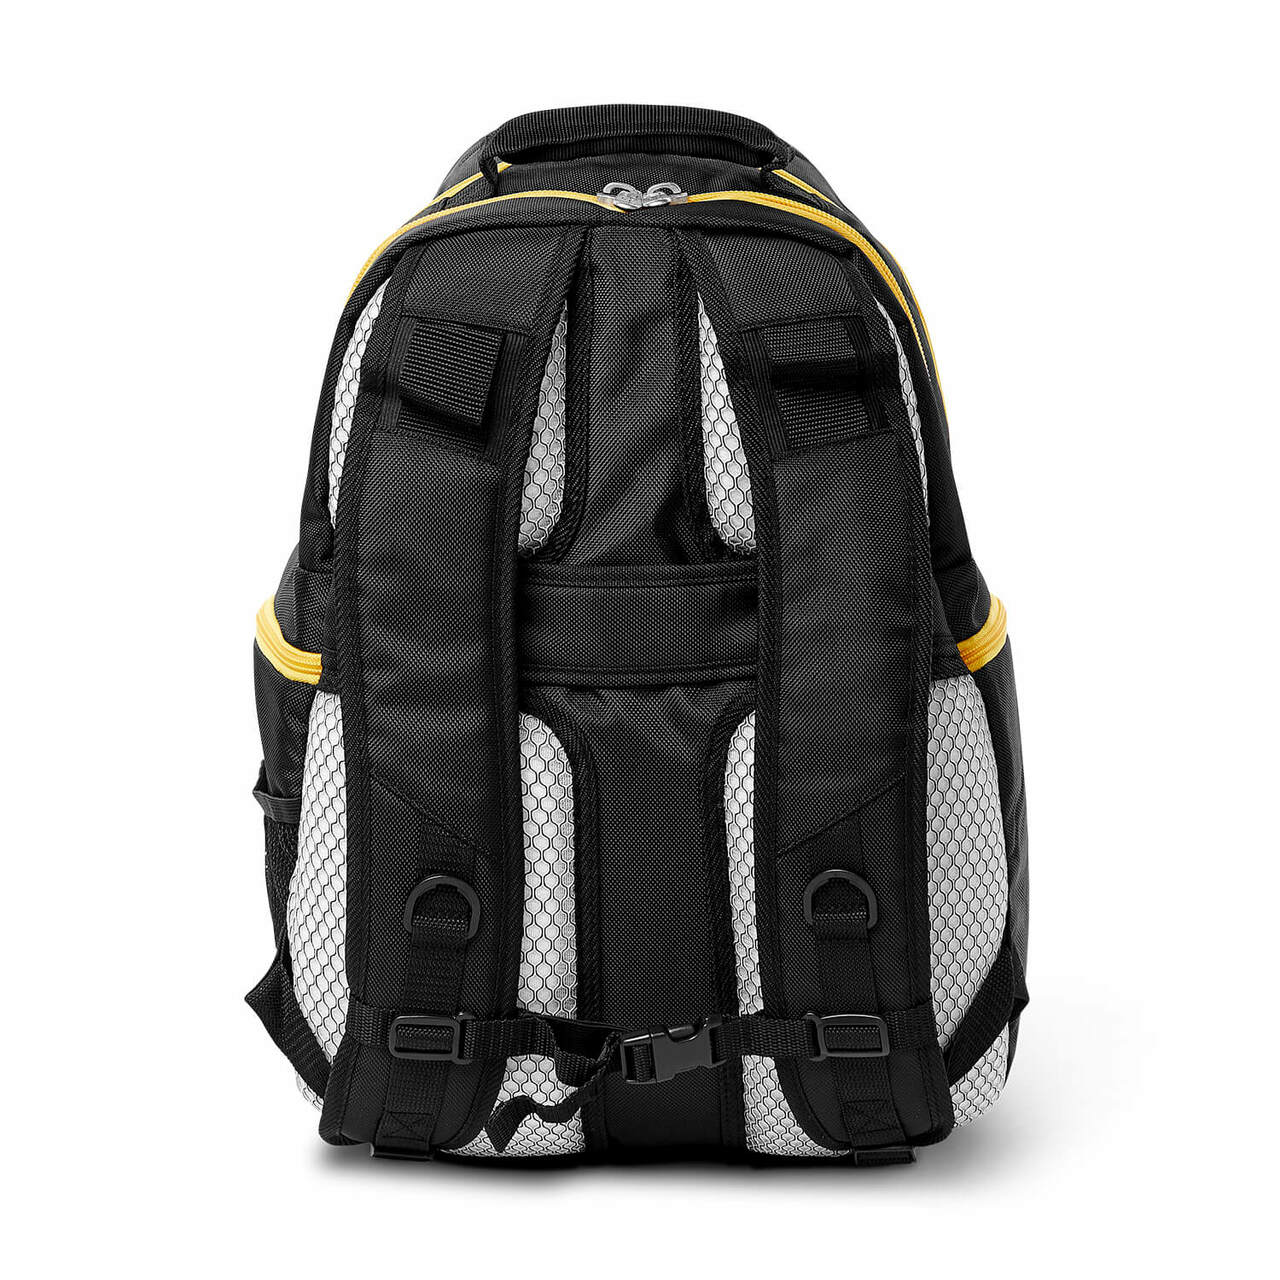 Trojans Backpack | USC Trojans Laptop Backpack